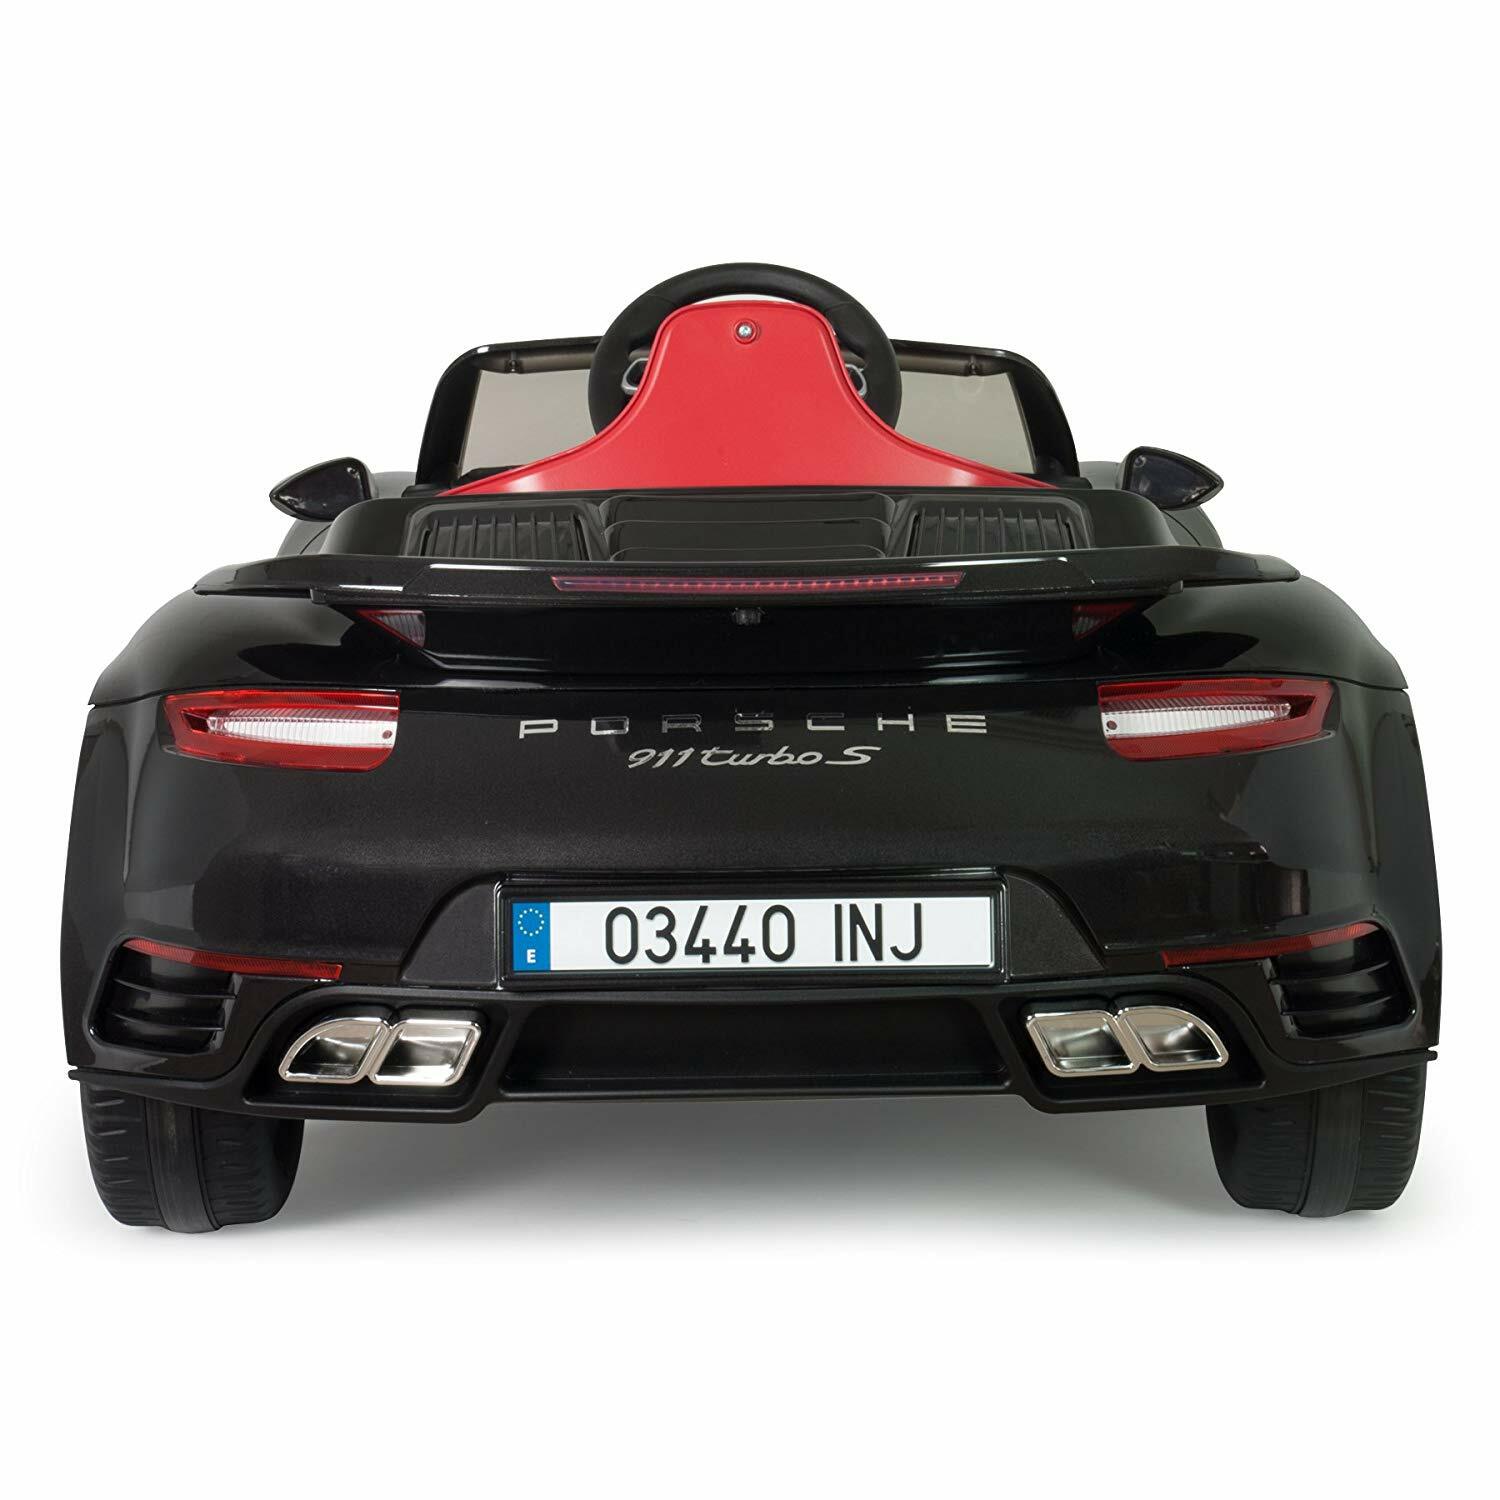 INJUSA Official Licensed Porsche Car for Kids 911 12V Turbo S Special Black  Edition